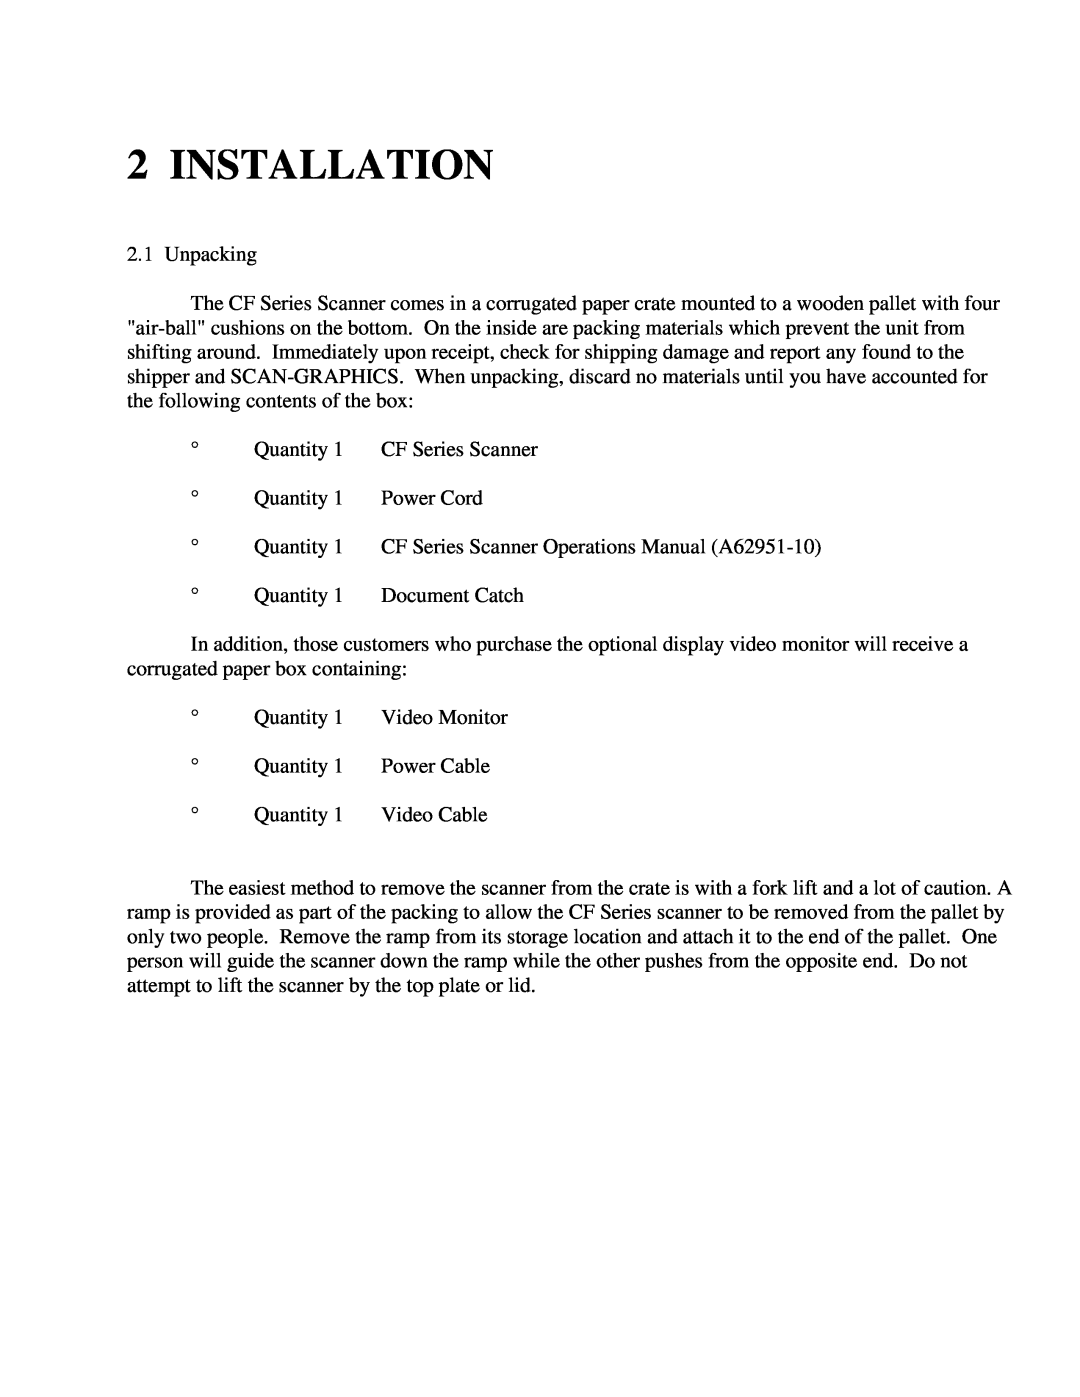 IBM CF Series manual Installation 